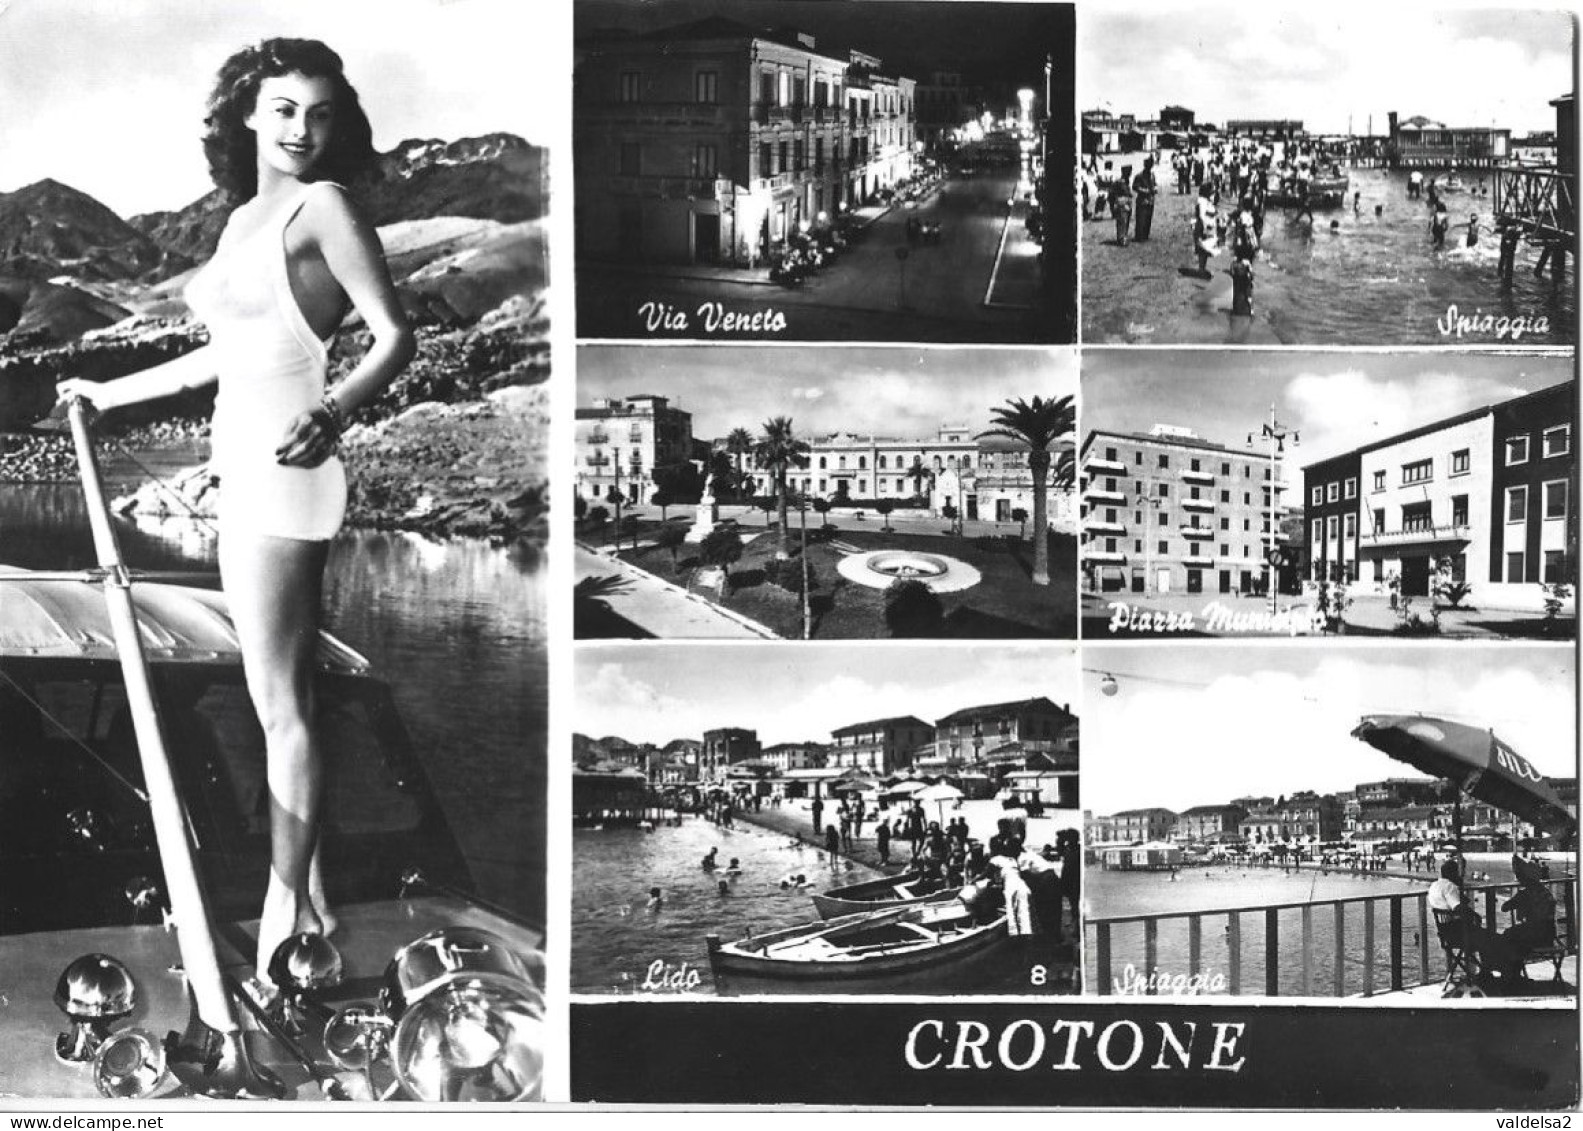 CROTONE - 7 VEDUTE - PIN UP - DONNINA SEXY - CHARME - WOMAN - VIA VENETO - SPIAGGIA - 1960 - Crotone